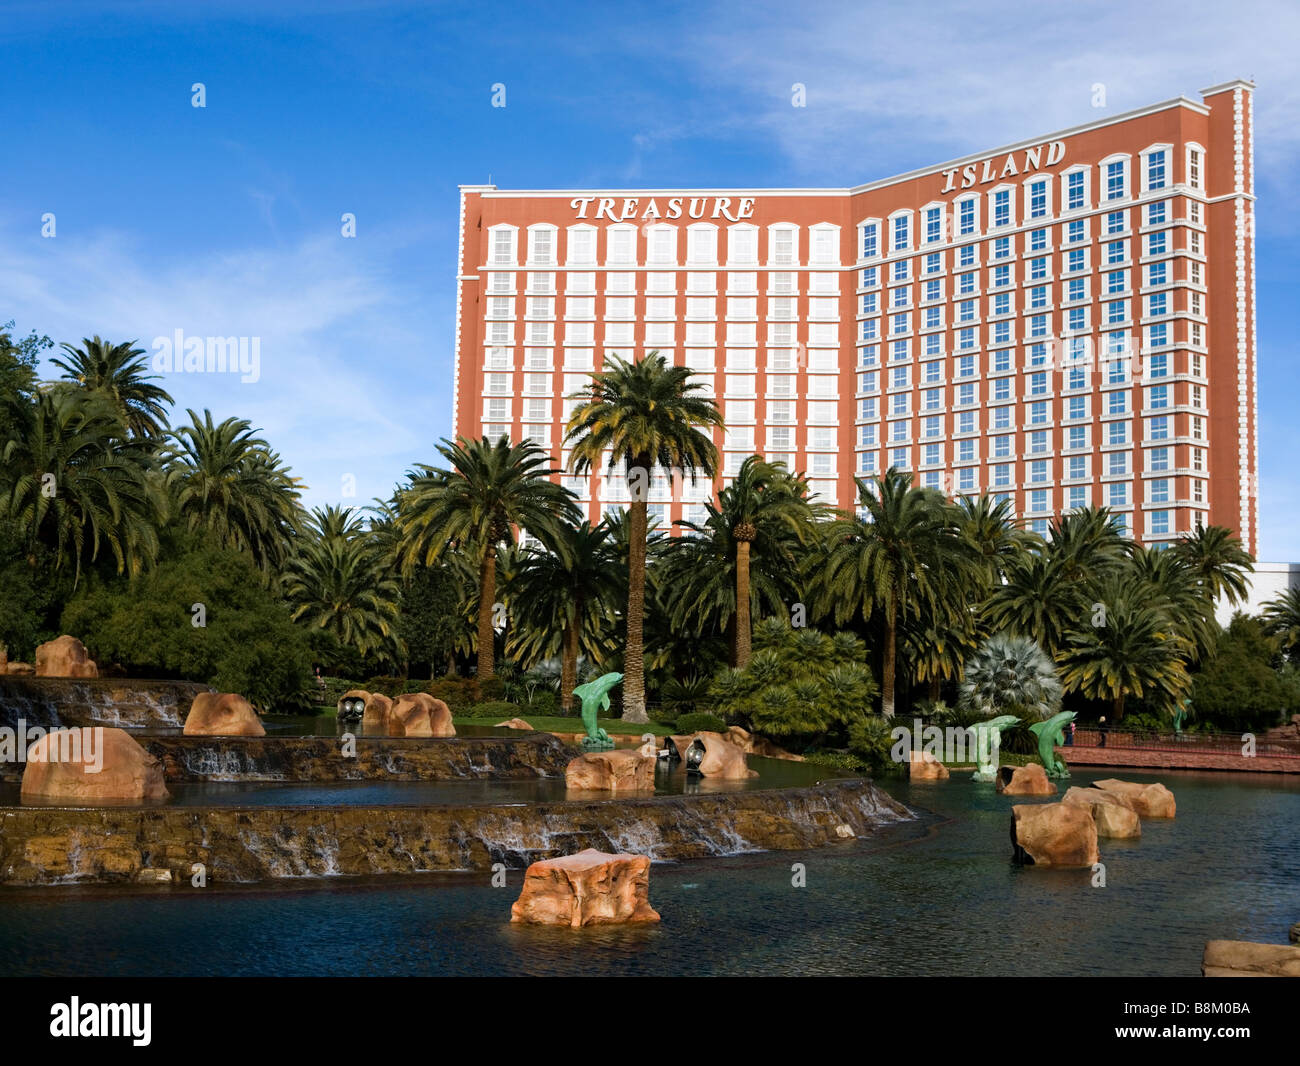 Treasure Island hotel and casino on the Las Vegas strip, Nevada, USA Stock Photo